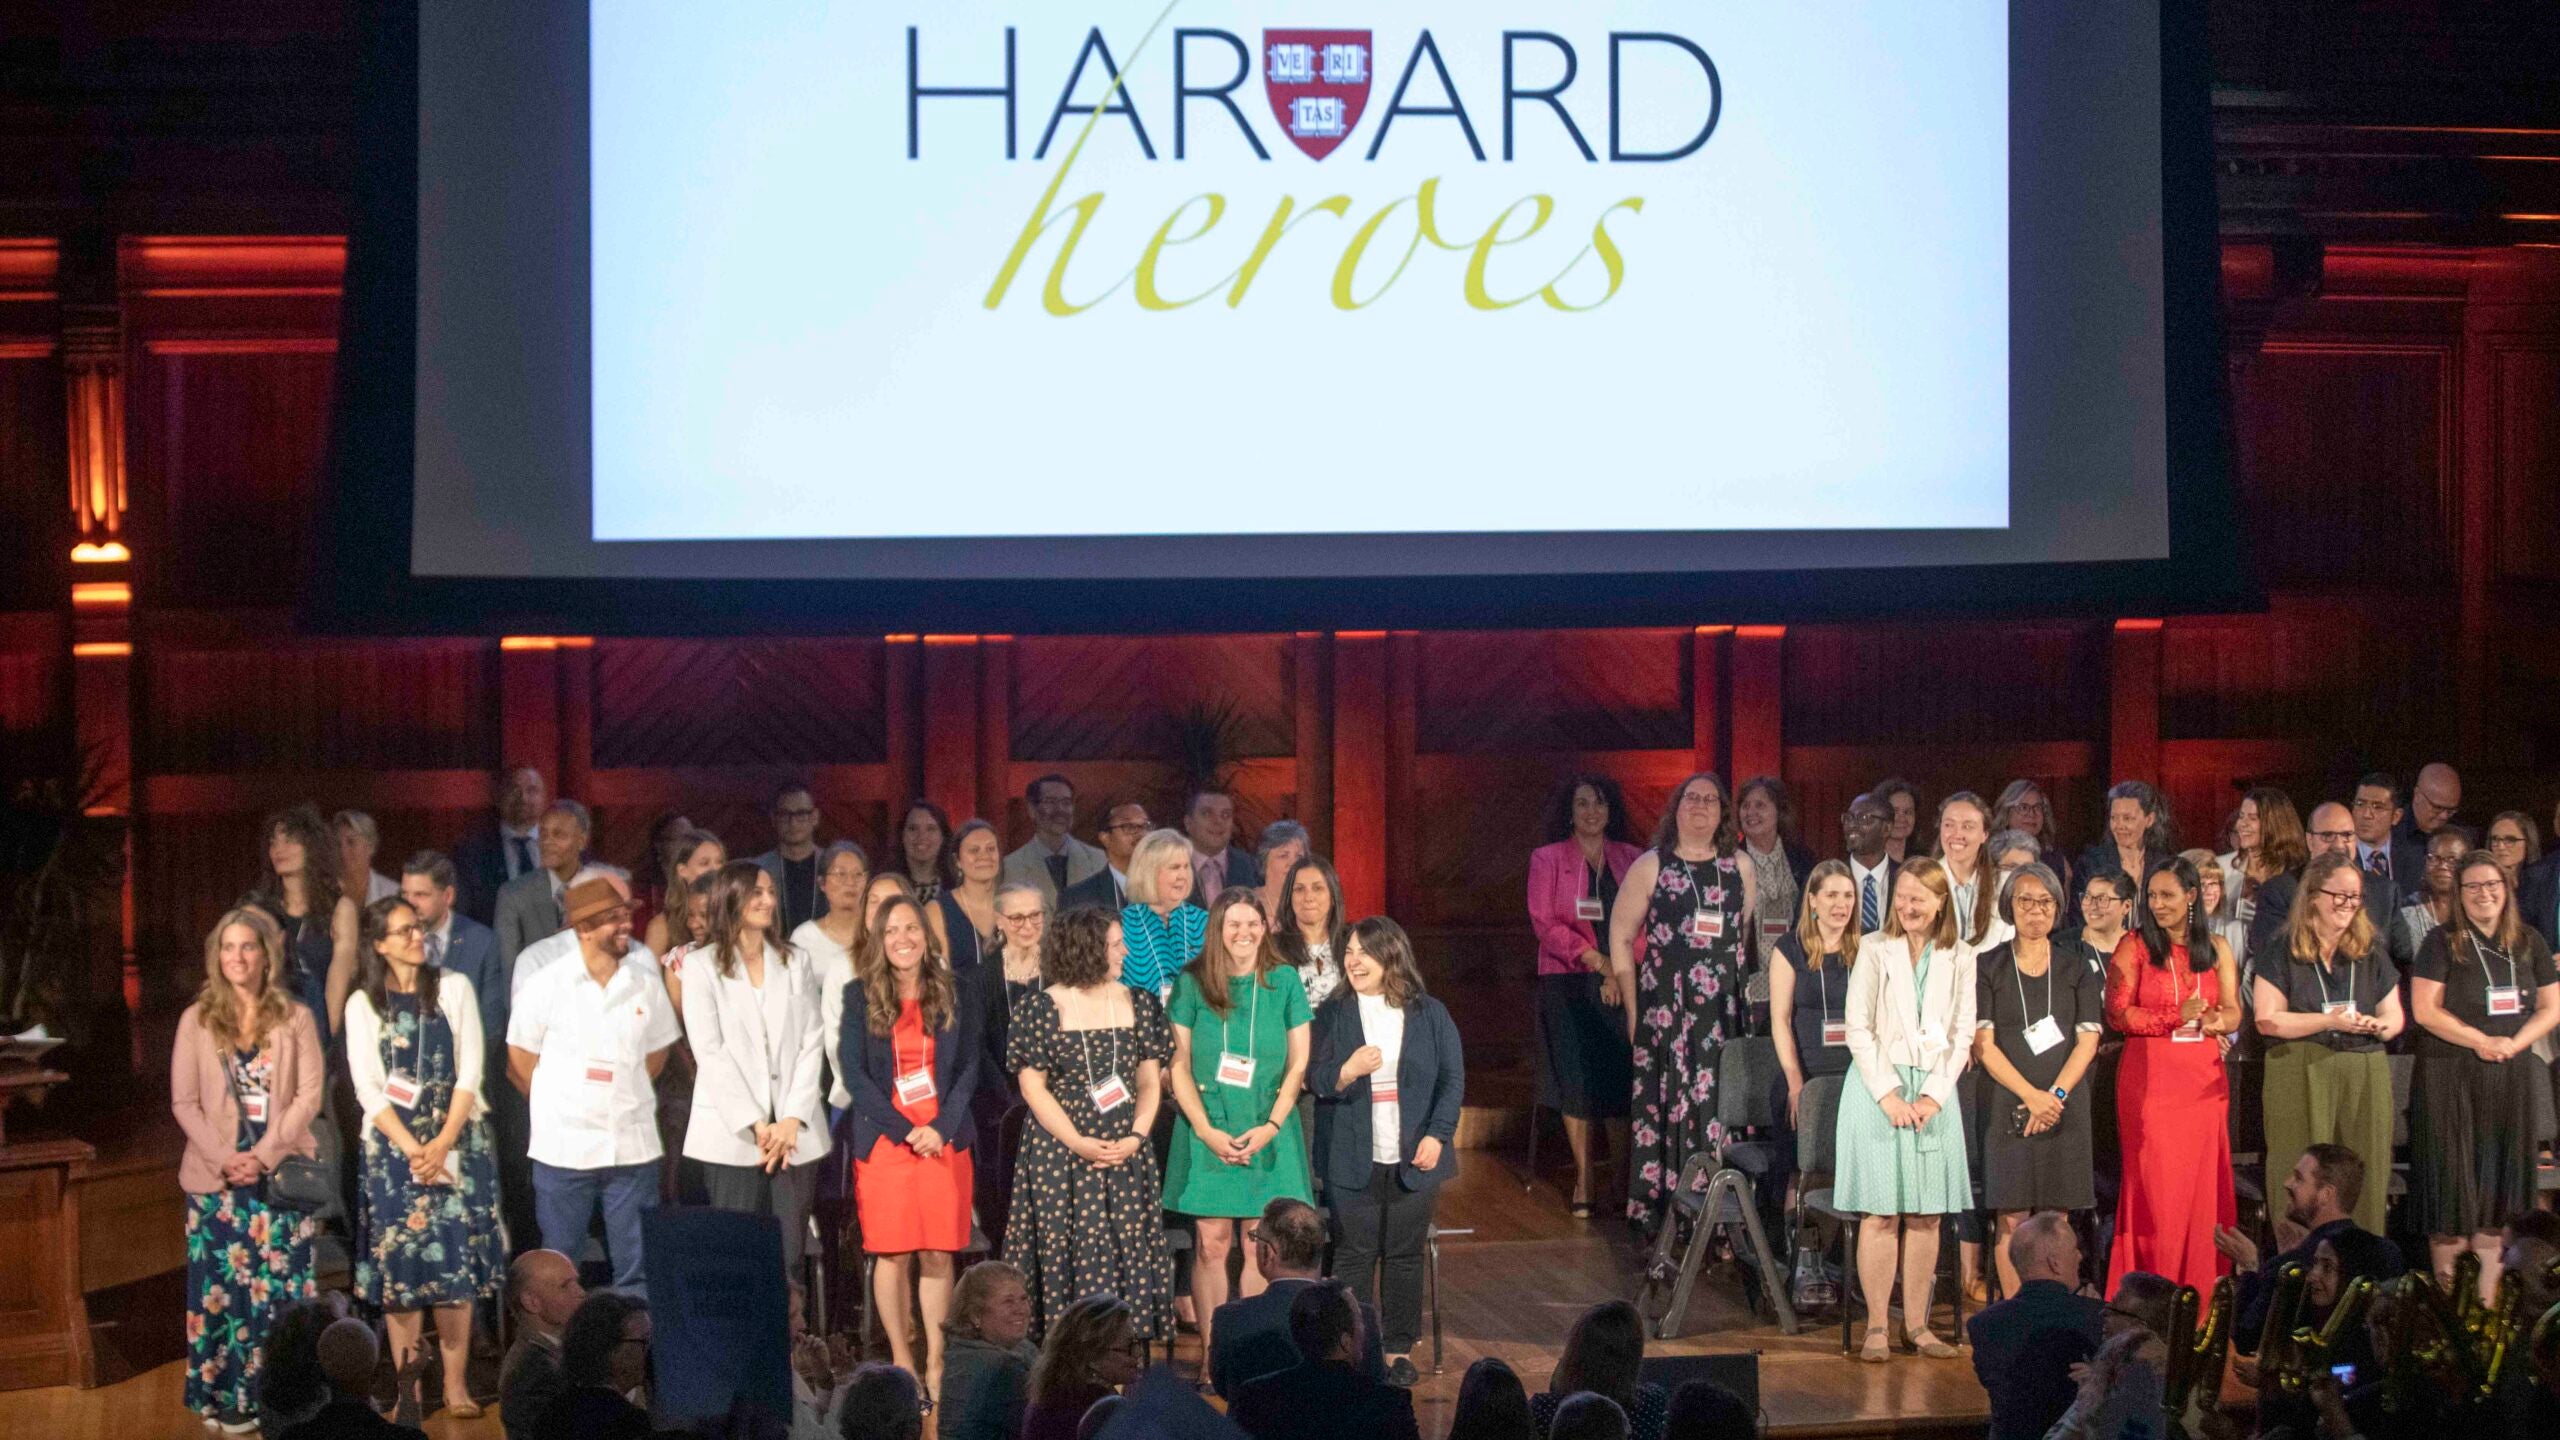 Harvard Heroes recipients on stage.